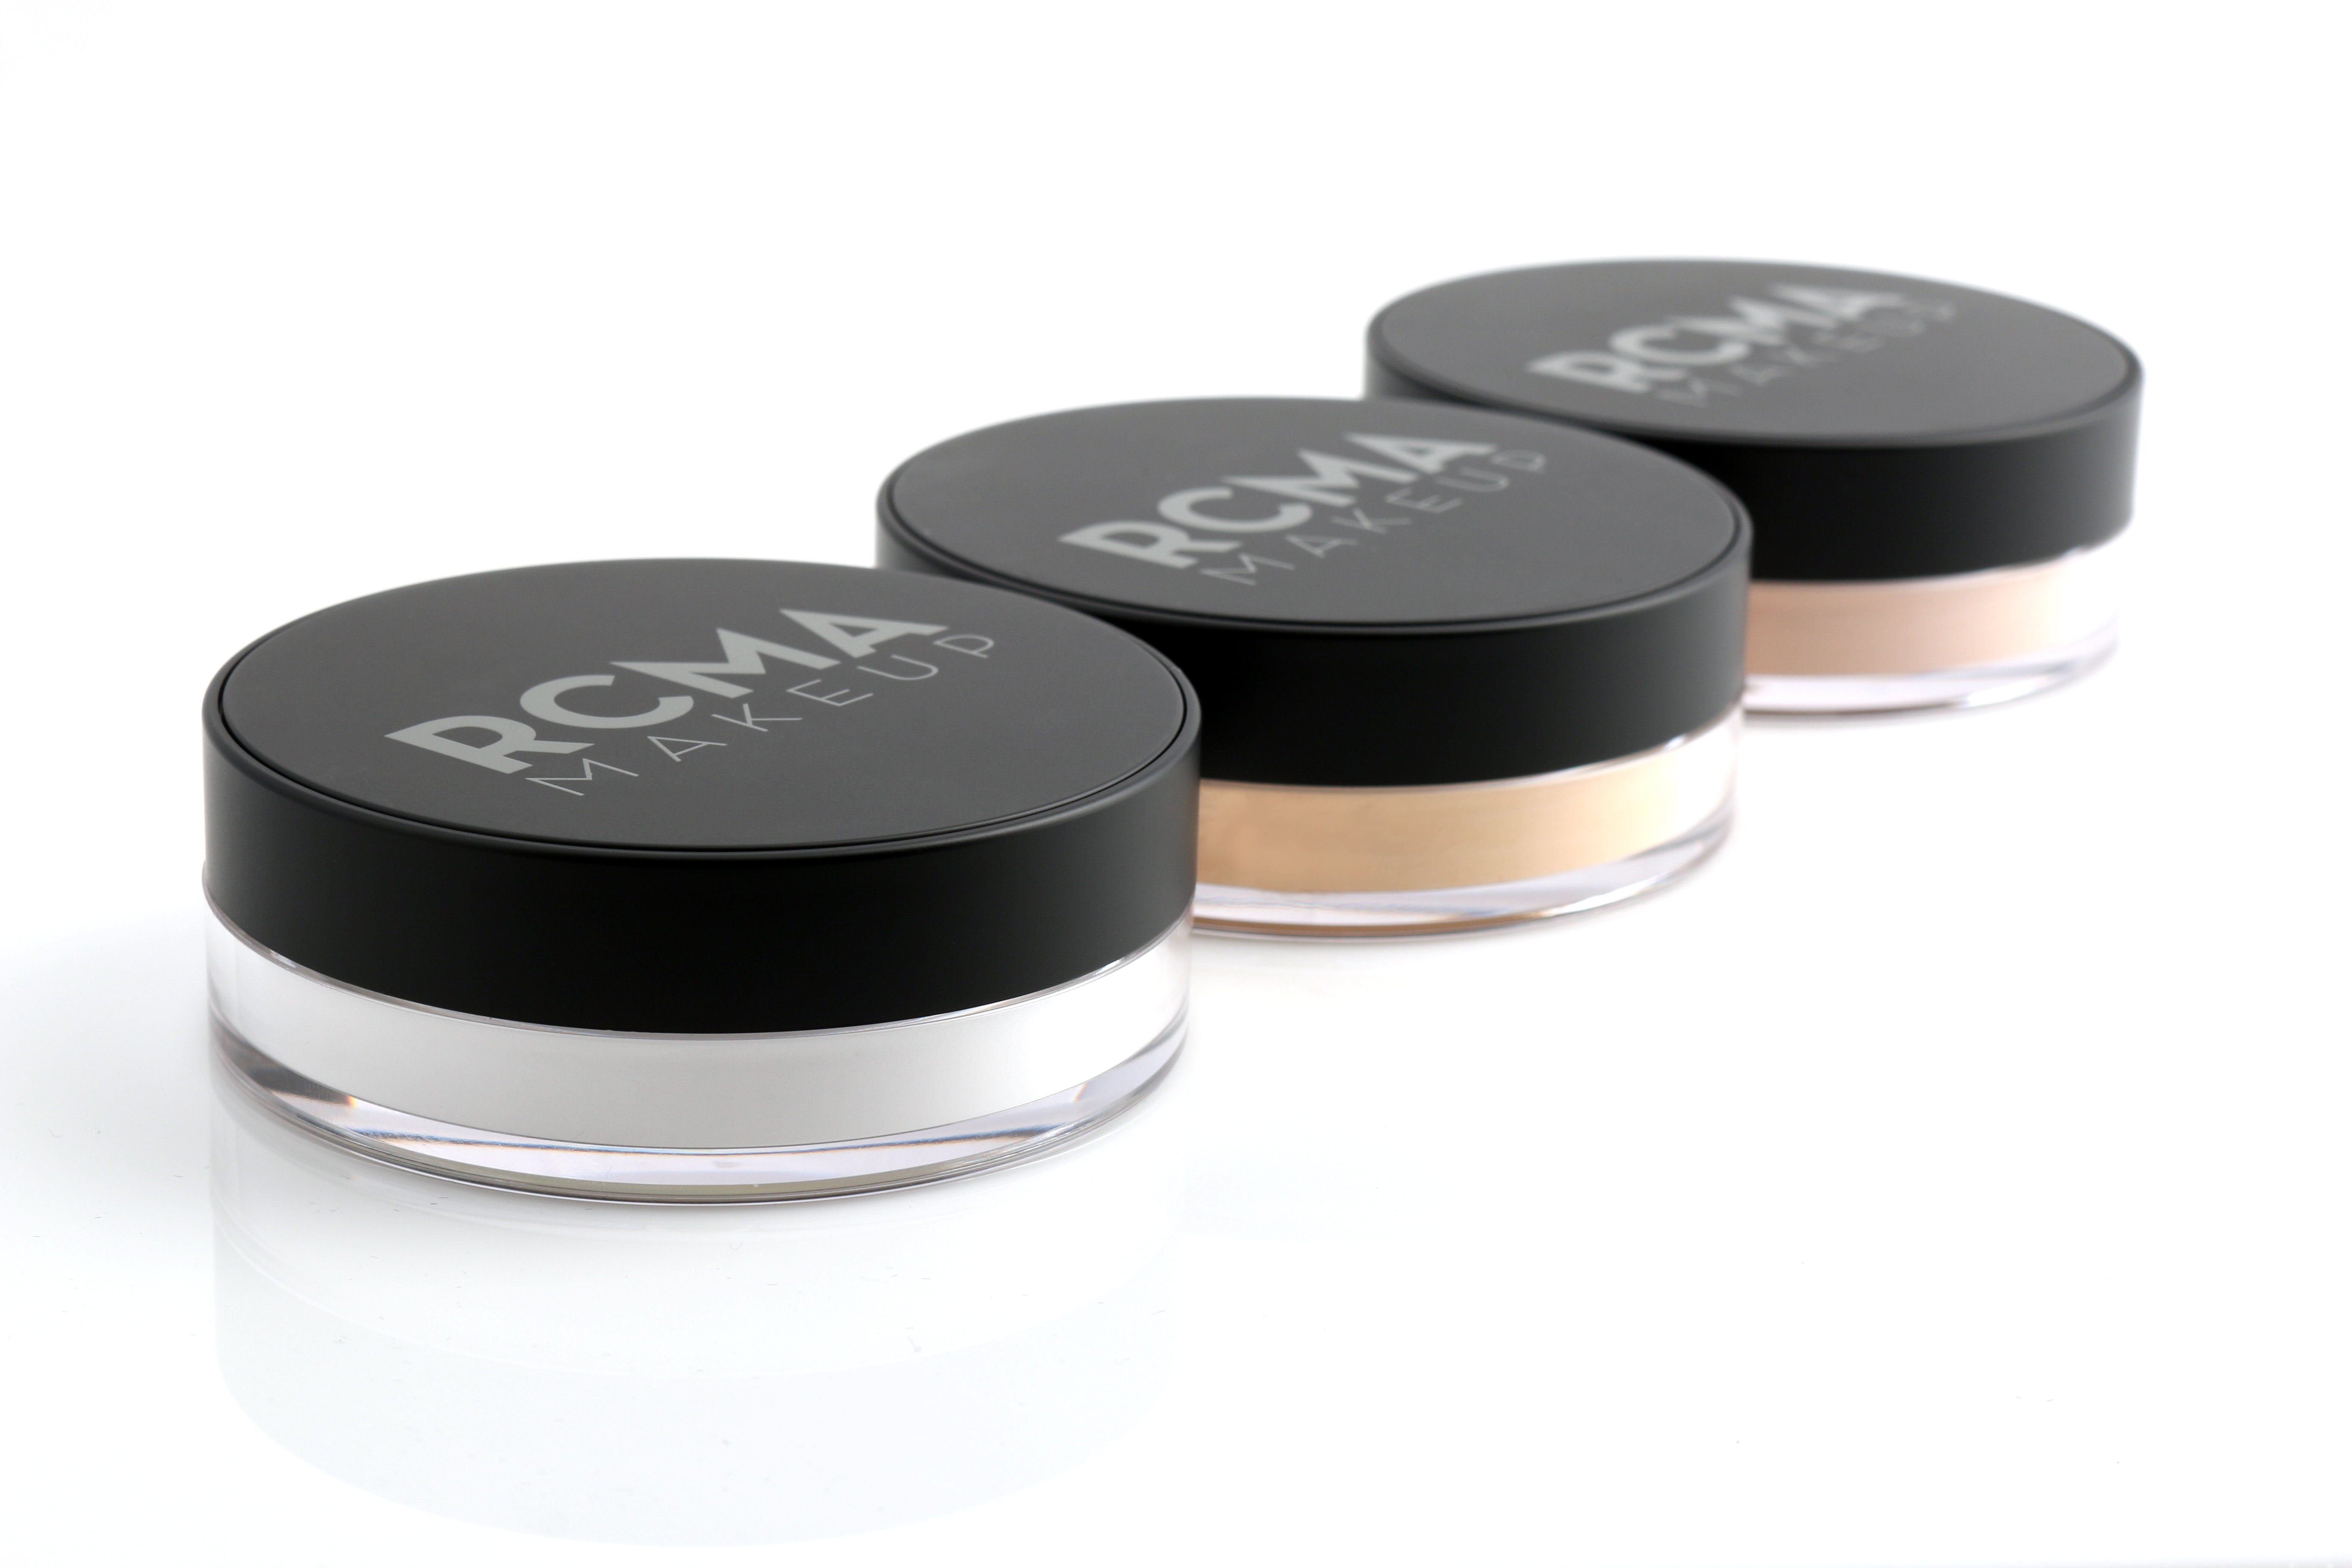 RCMA Warm Gold Powder – The Makeup Shack